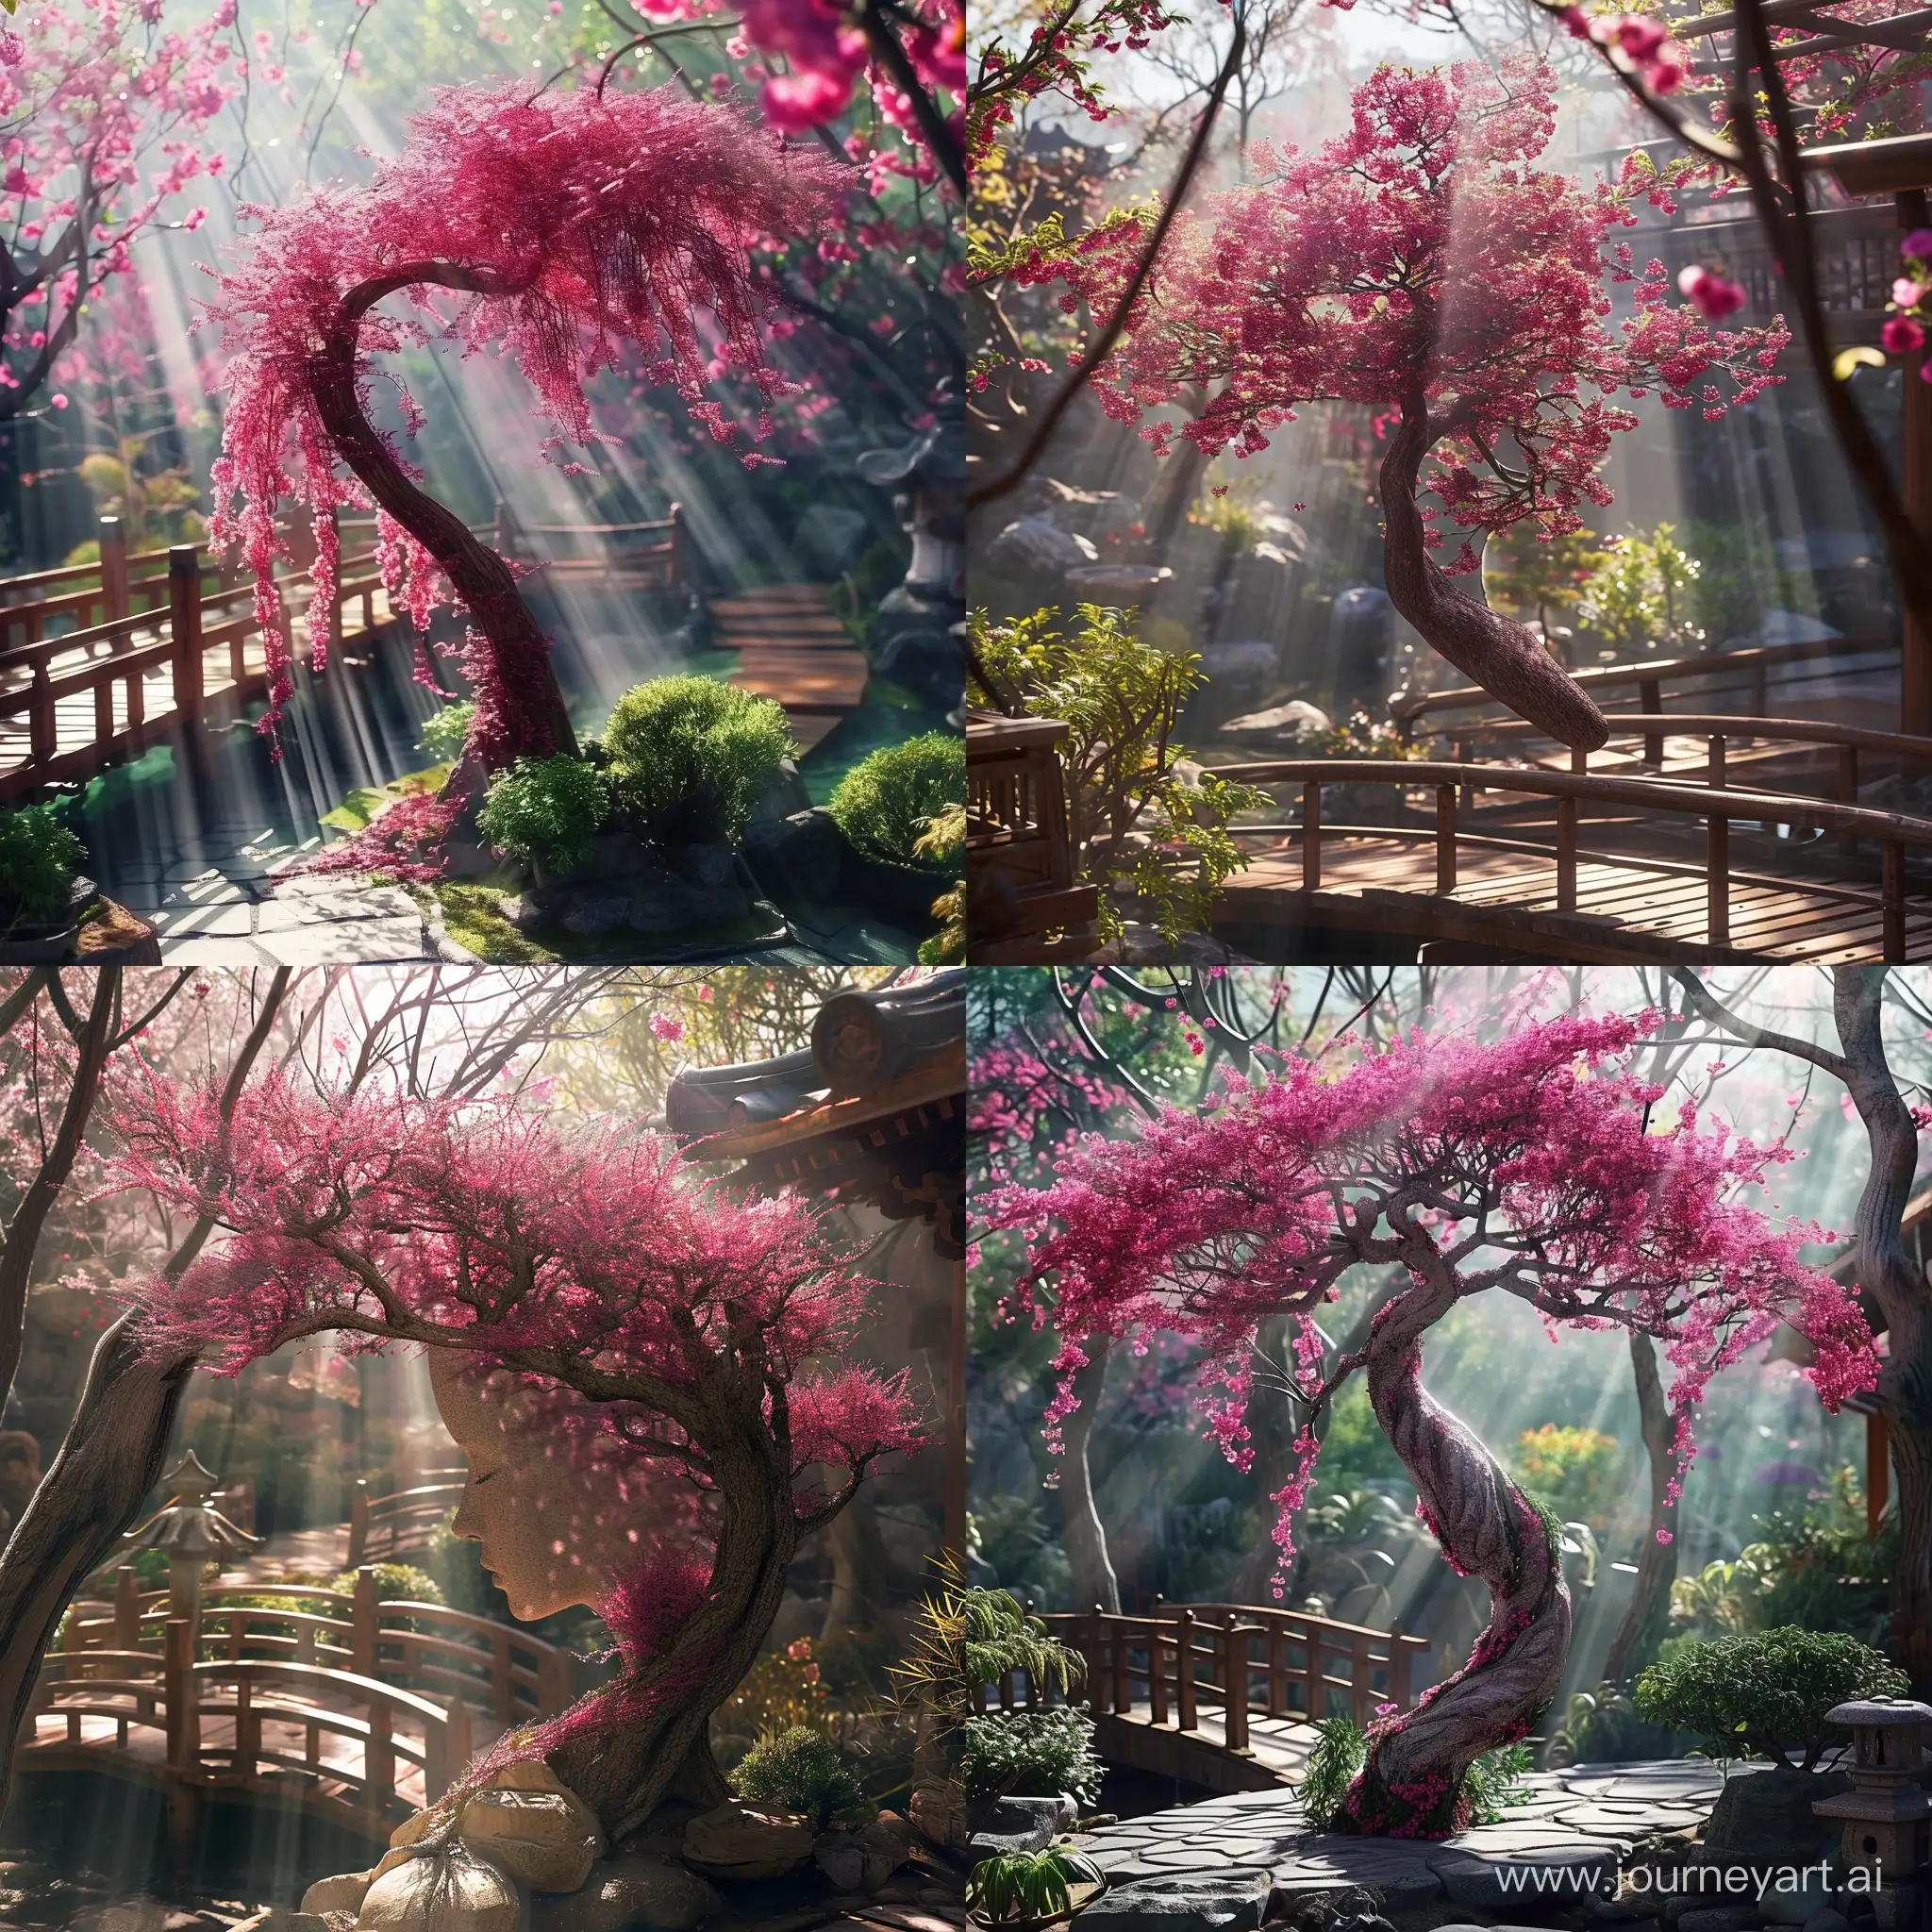 Enchanting-Fuchsia-Tree-Sculpture-in-Tranquil-Japanese-Garden